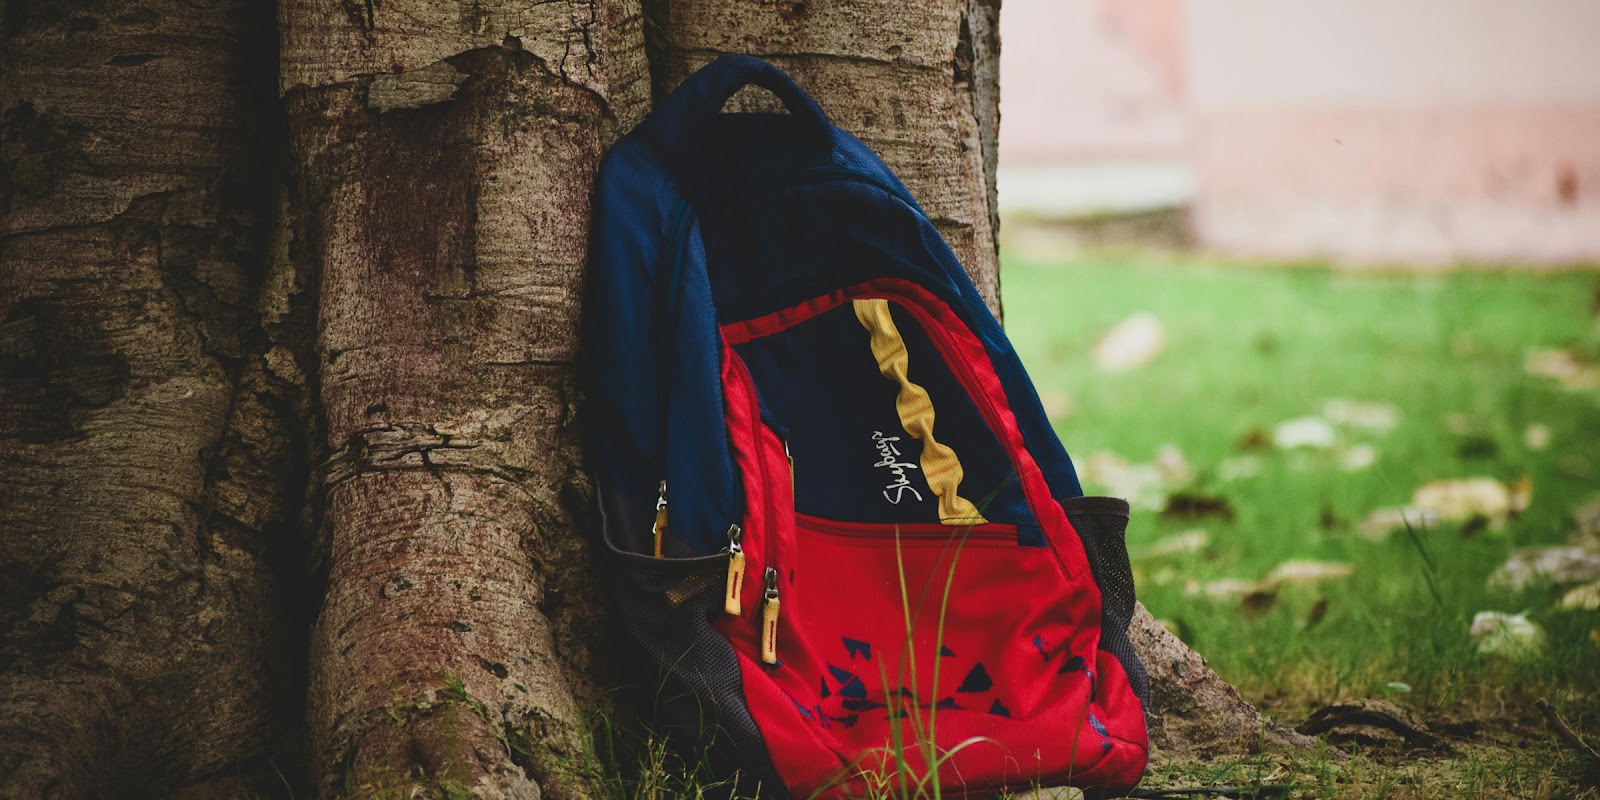 Old backpack | Source: Pexels